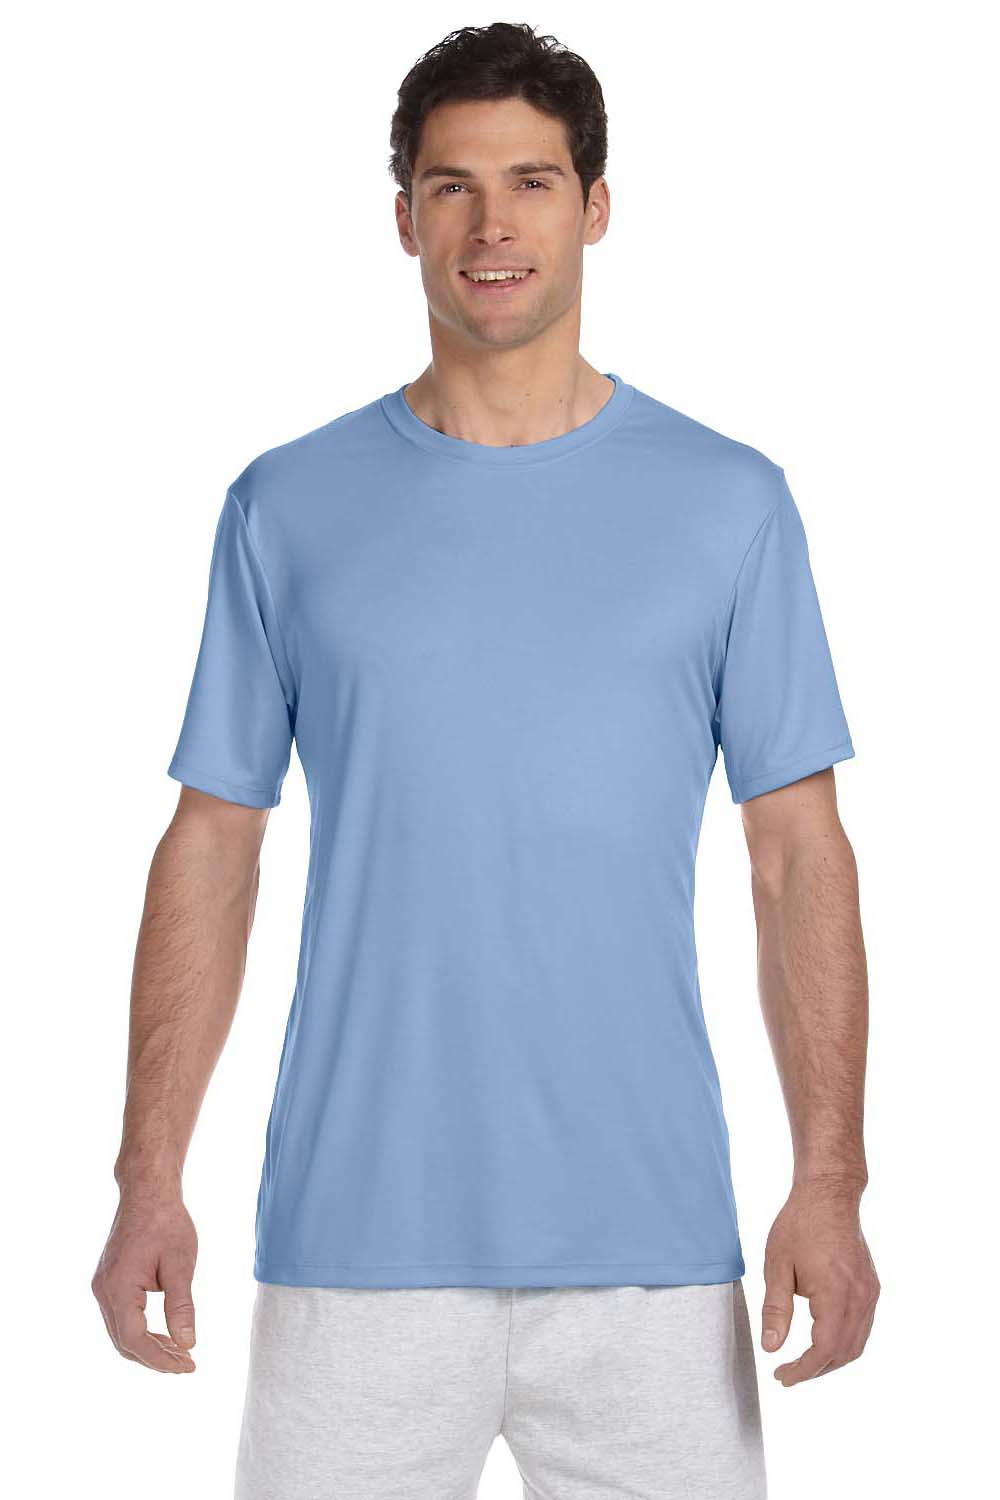 Hanes 4820 Mens Cool DRI FreshIQ Moisture Wicking Short Sleeve Crewneck T-Shirt Light Blue Front